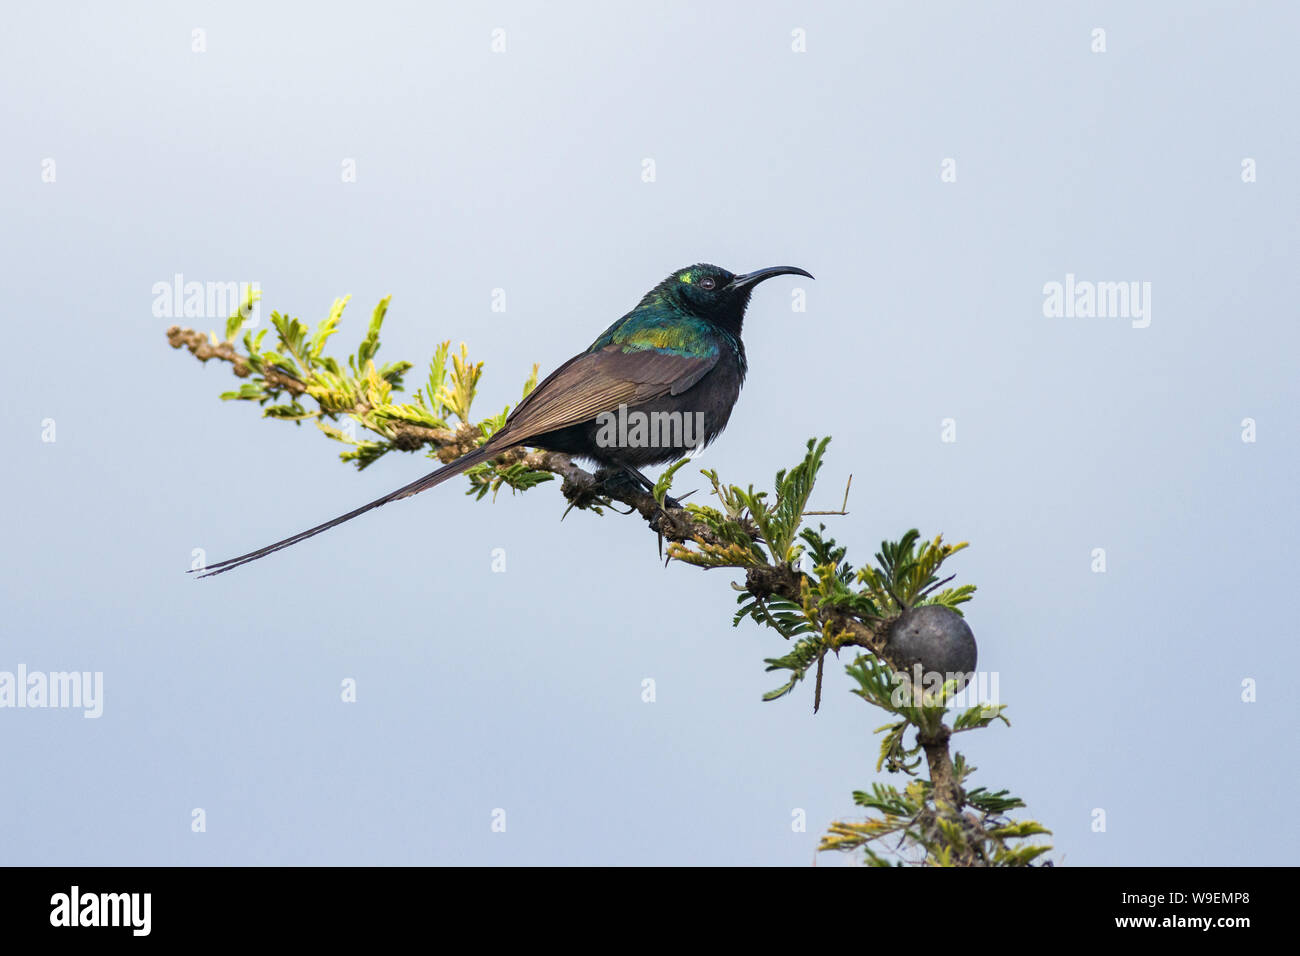 bronzy or bronze sunbird (Nectarinia kilimensis) perched on branch, Naivasha, Kenya Stock Photo